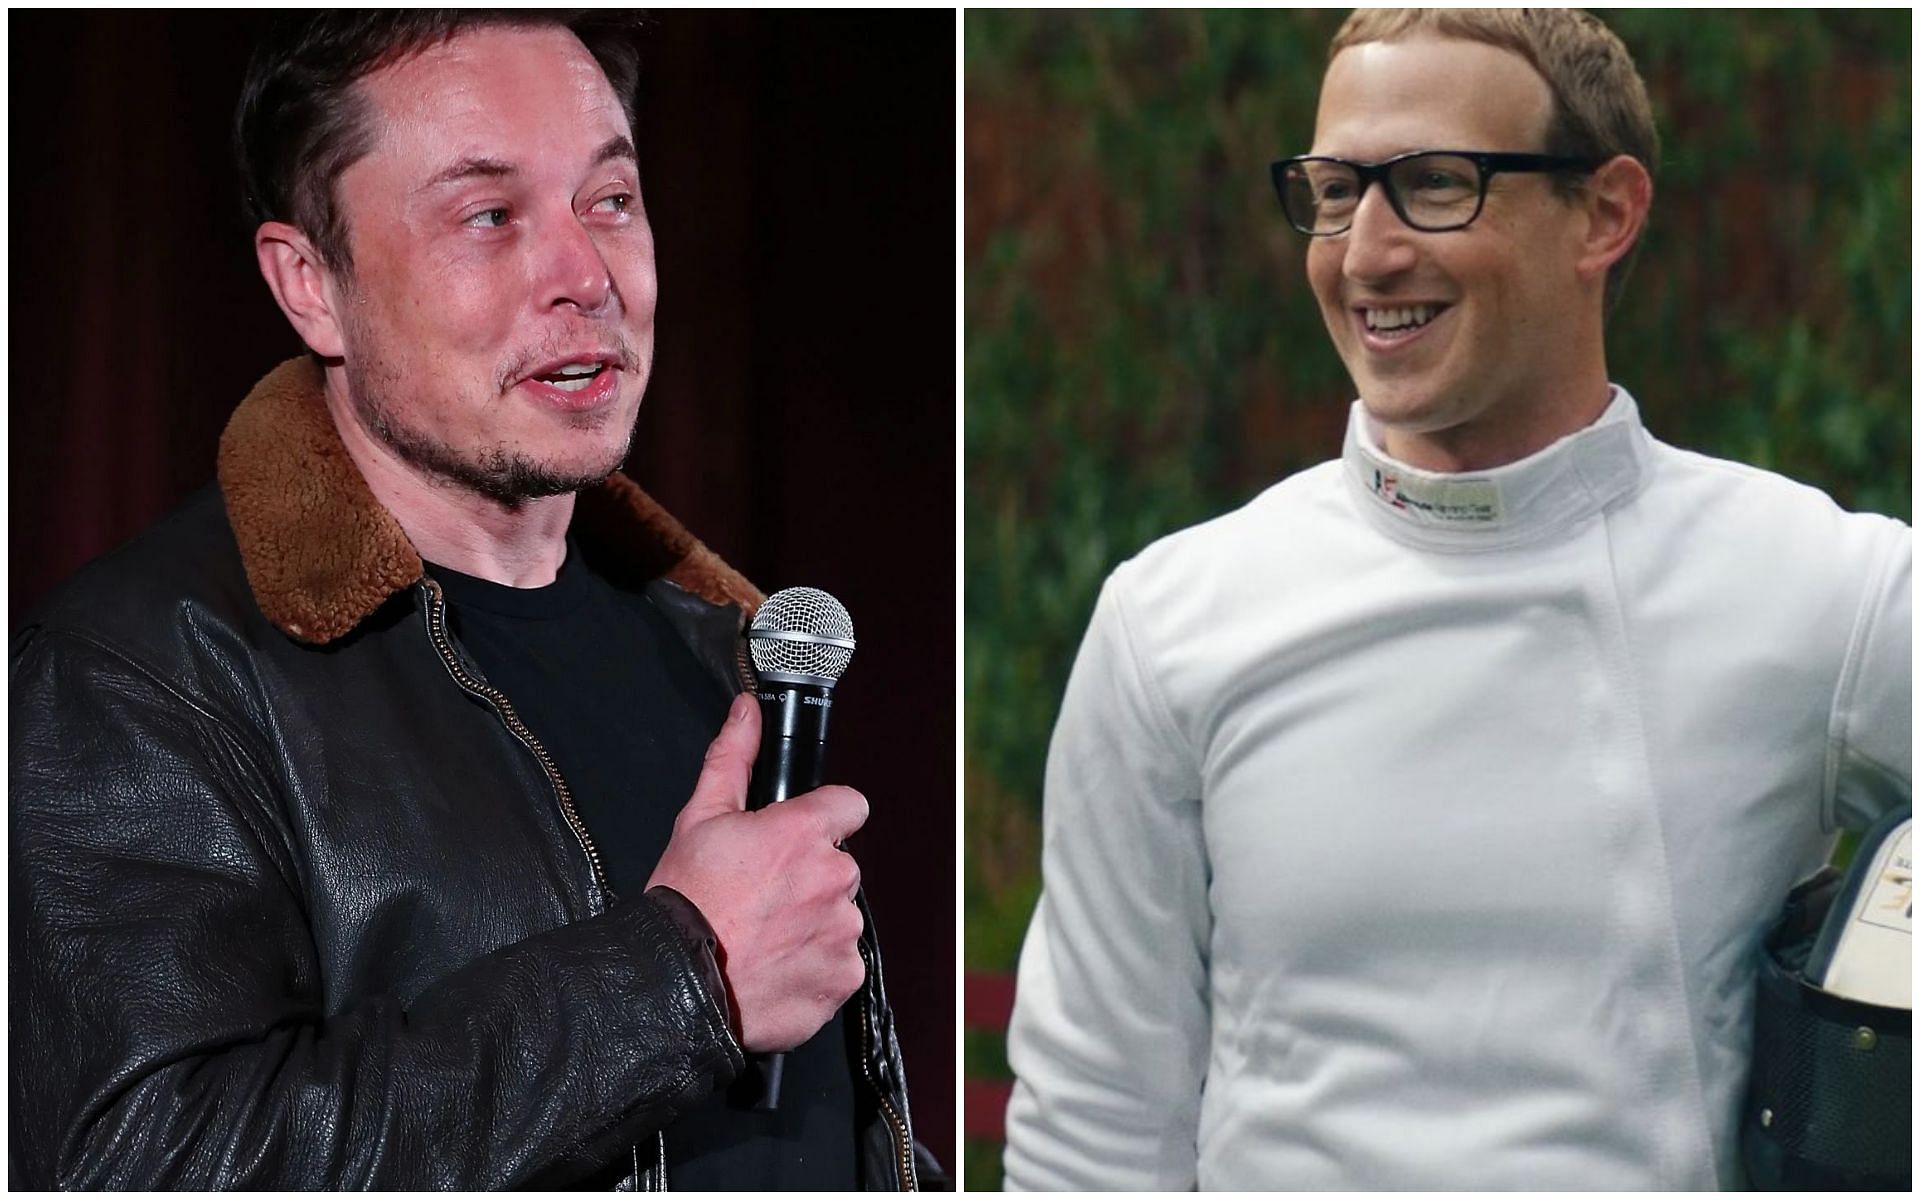 Elon Musk vs Mark Zuckerberg potential fight odds